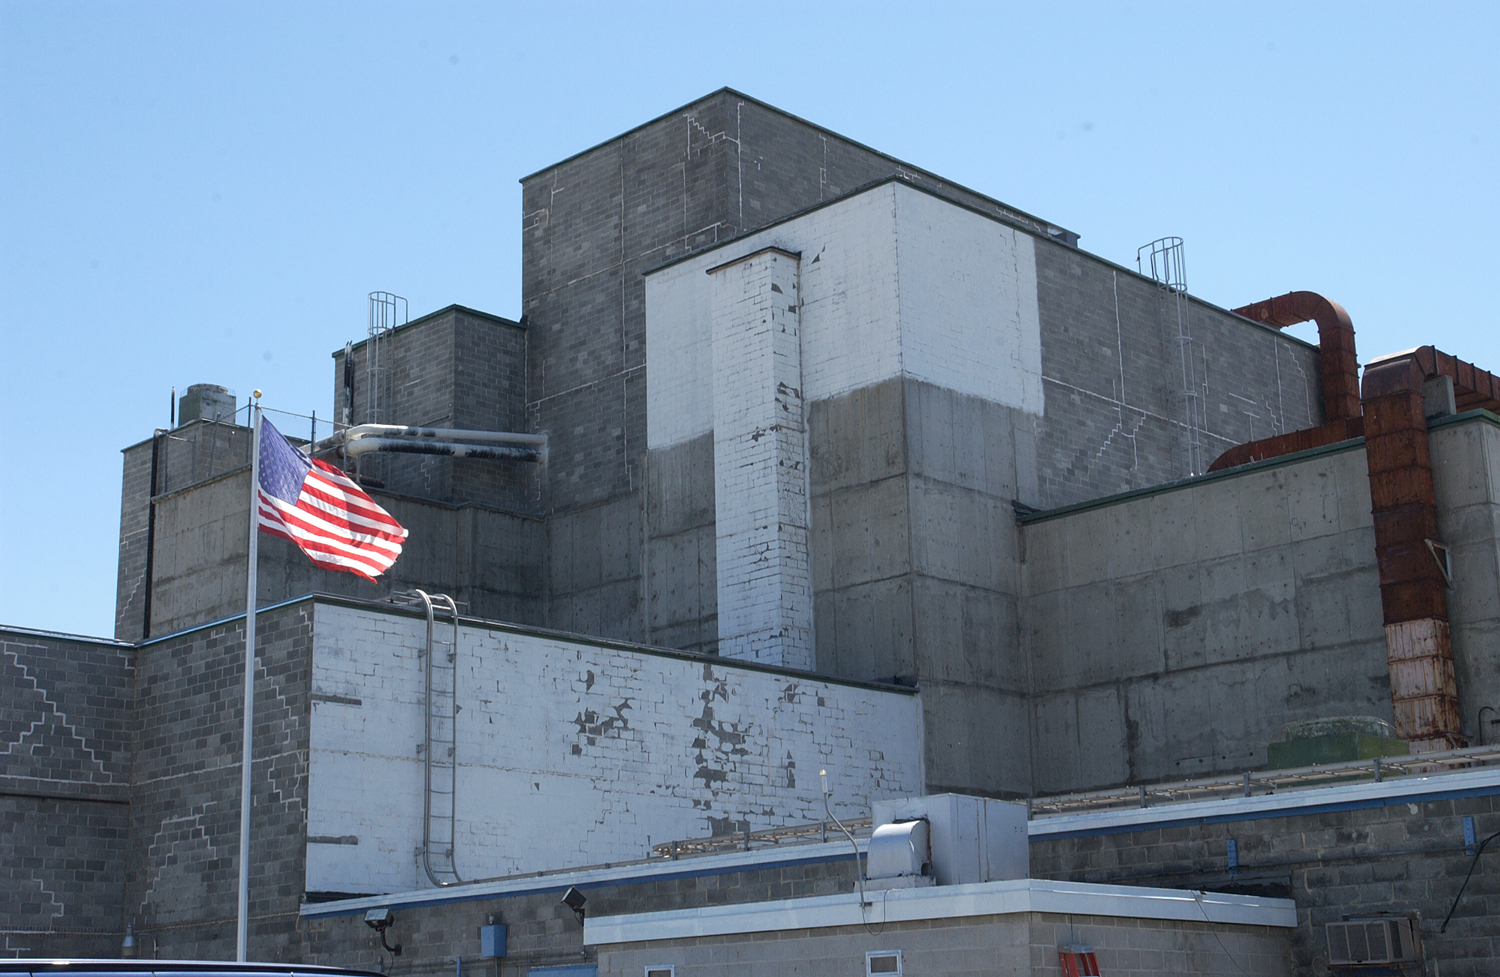 The B Reactor at Hanford